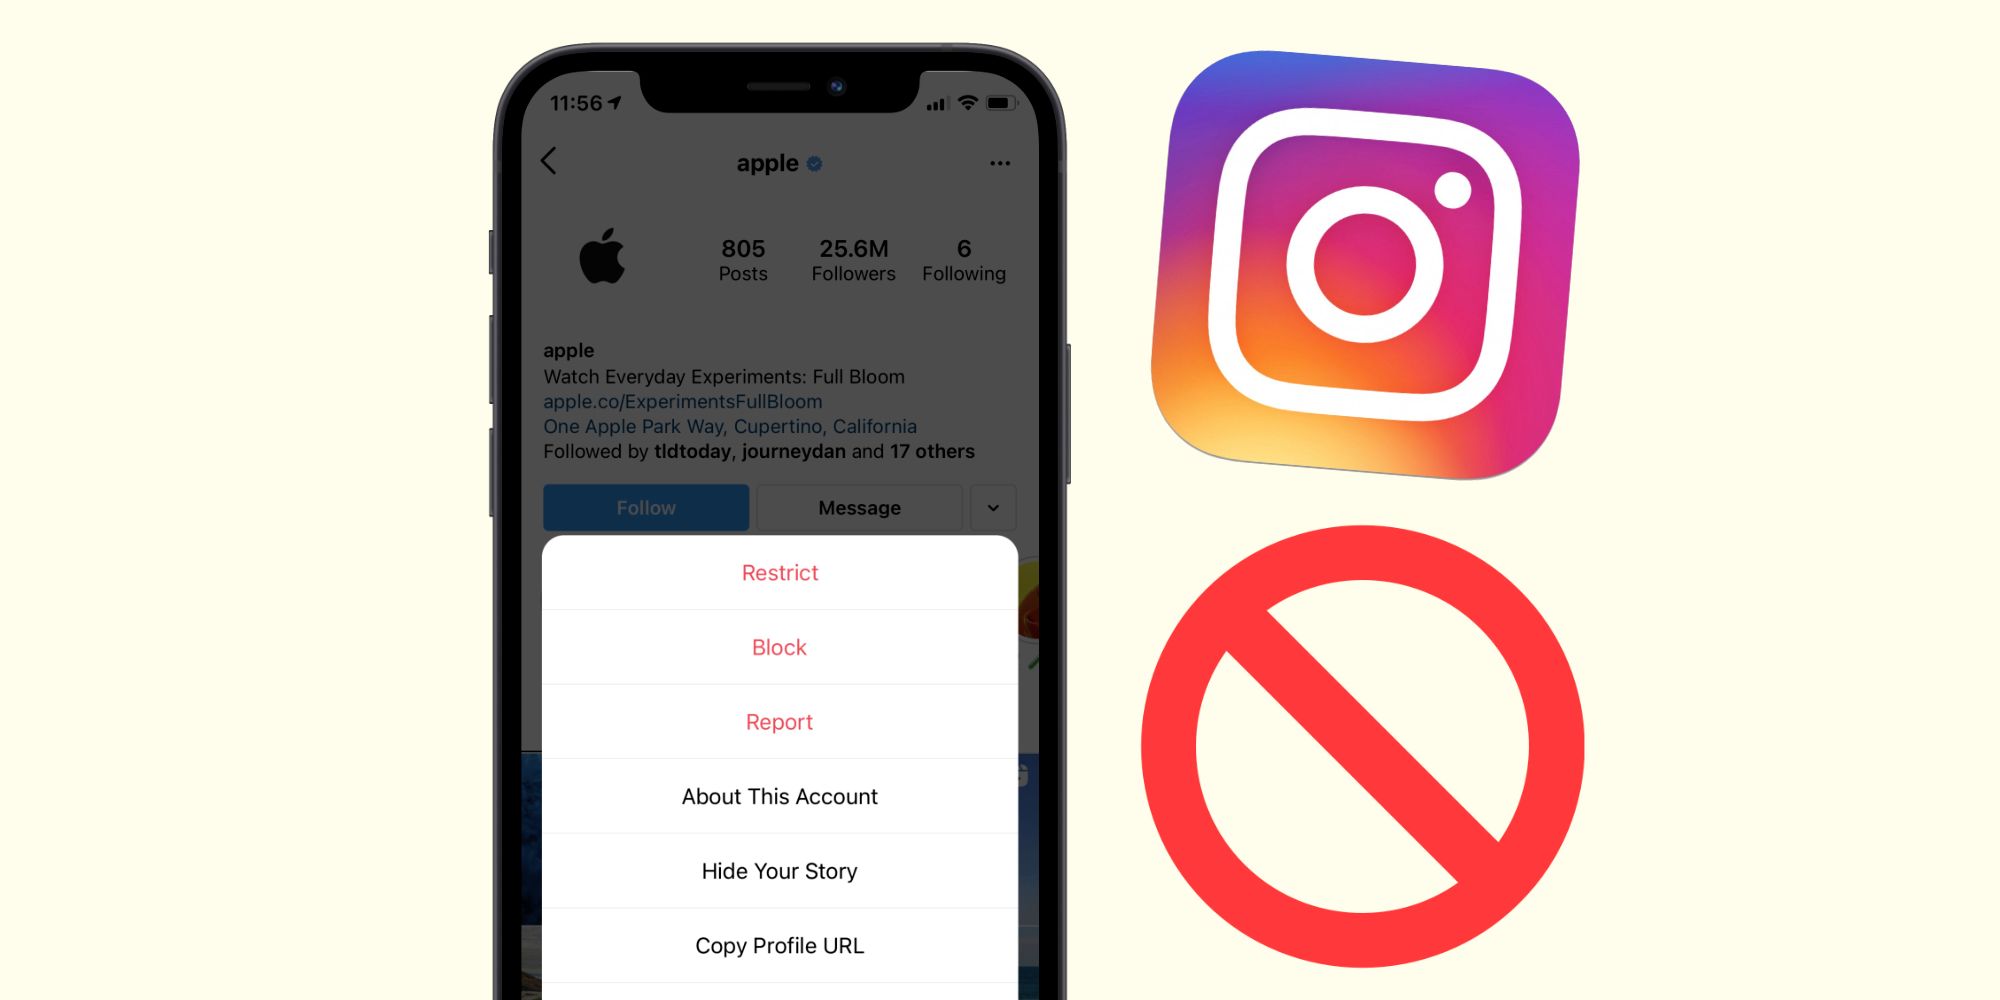 Blocking an account on Instagram